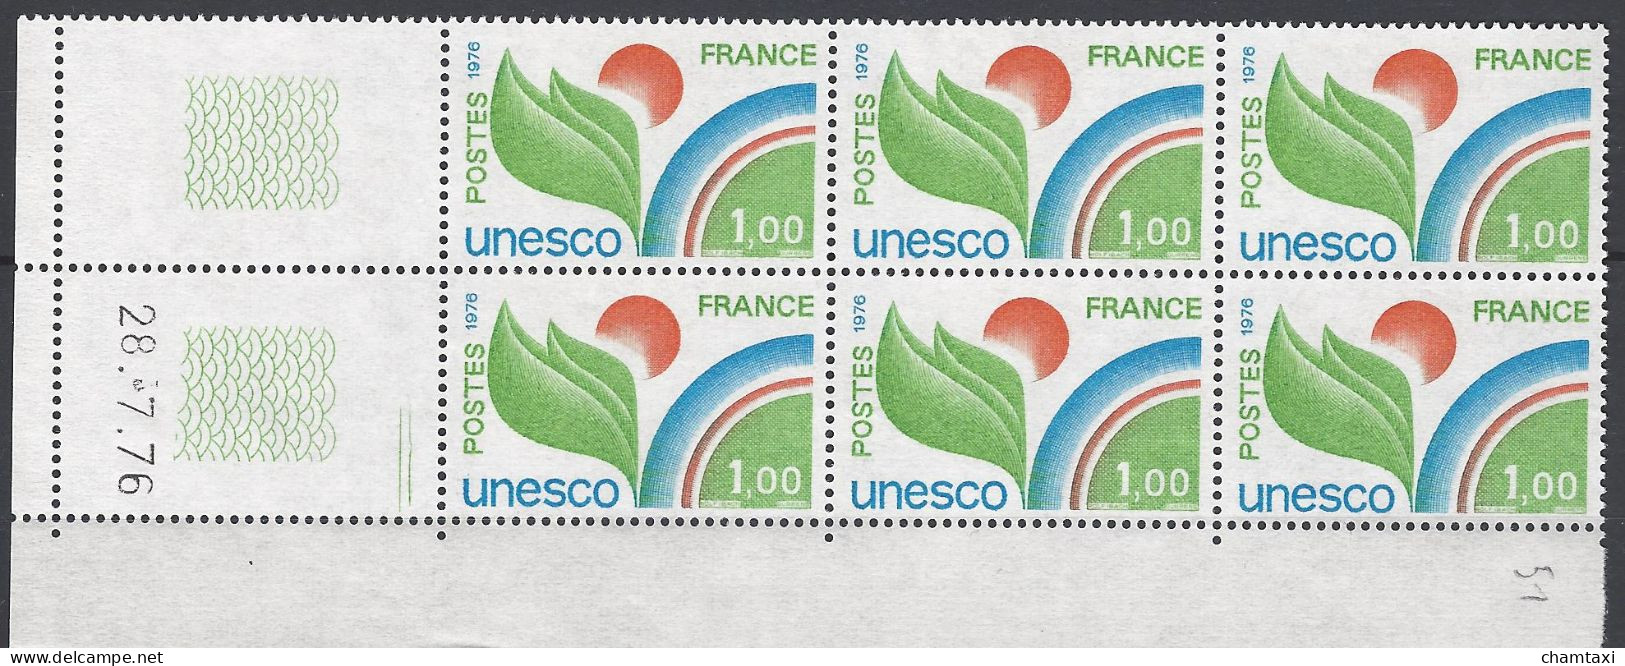 CD 51 FRANCE 1976 TIMBRE SERVICE UNESCO COIN DATE 51 : 28 / 7 / 76 - Dienstzegels